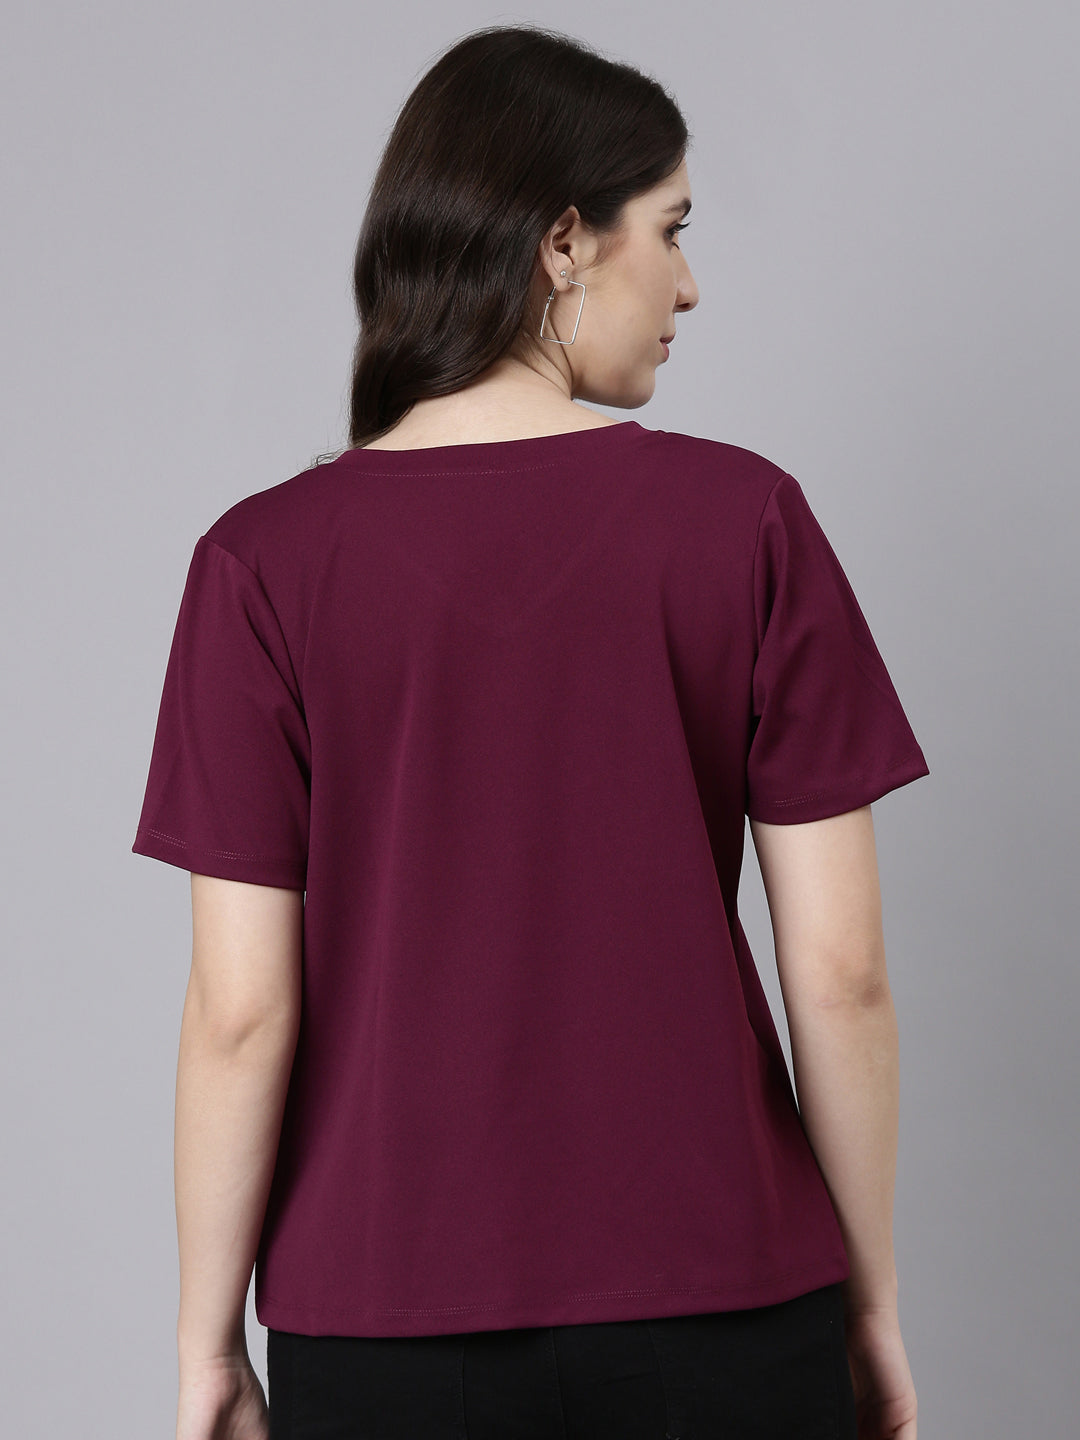 Buy t-shirt from  TheShaili V-Neck Half Sleeves Women's /Regular Fit Solid Plum  best price